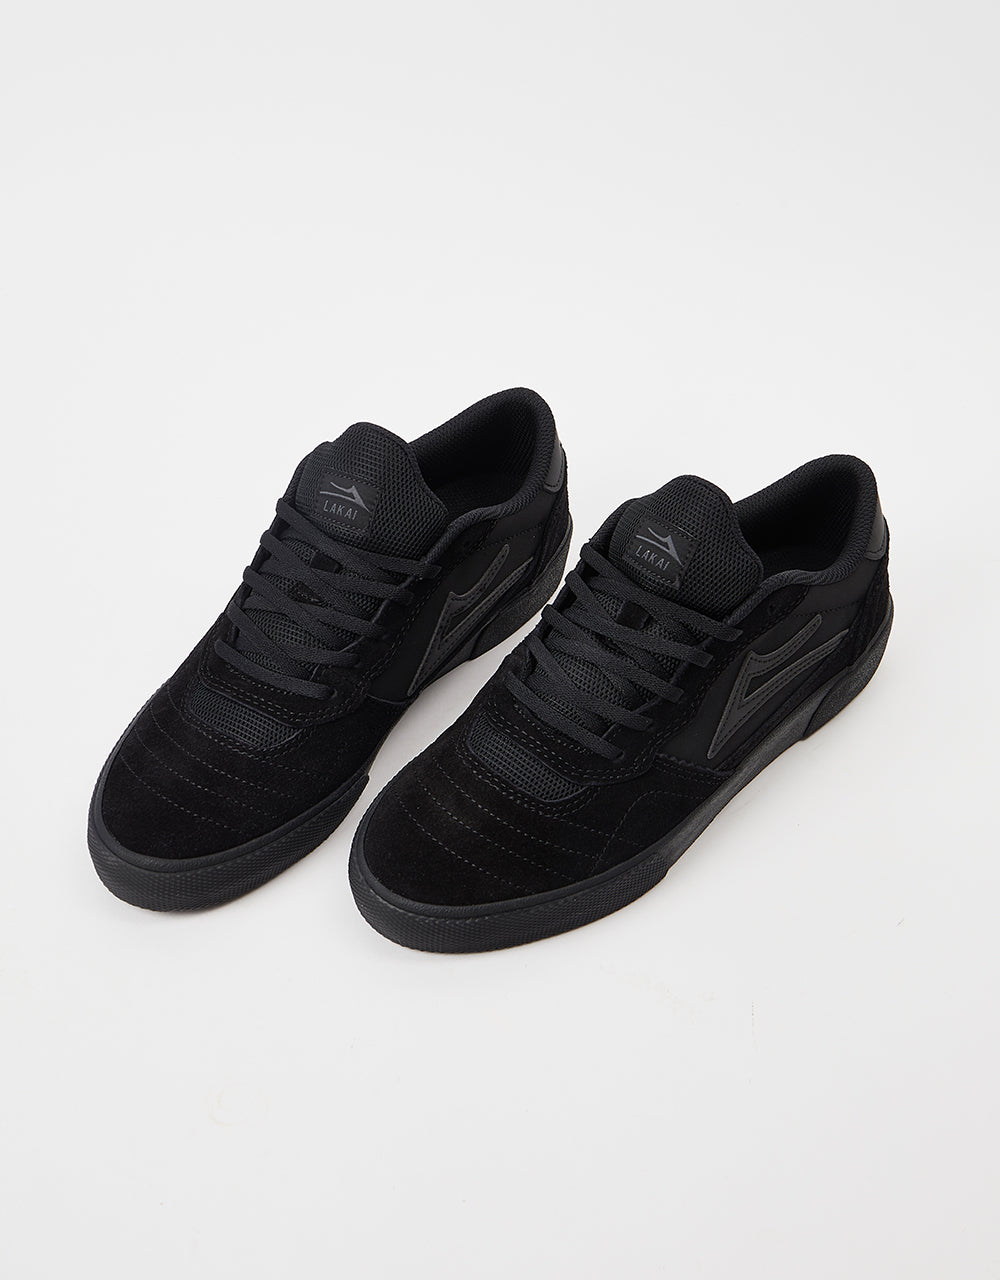 Lakai Cambridge Skate Shoes - Black/Reflective Suede